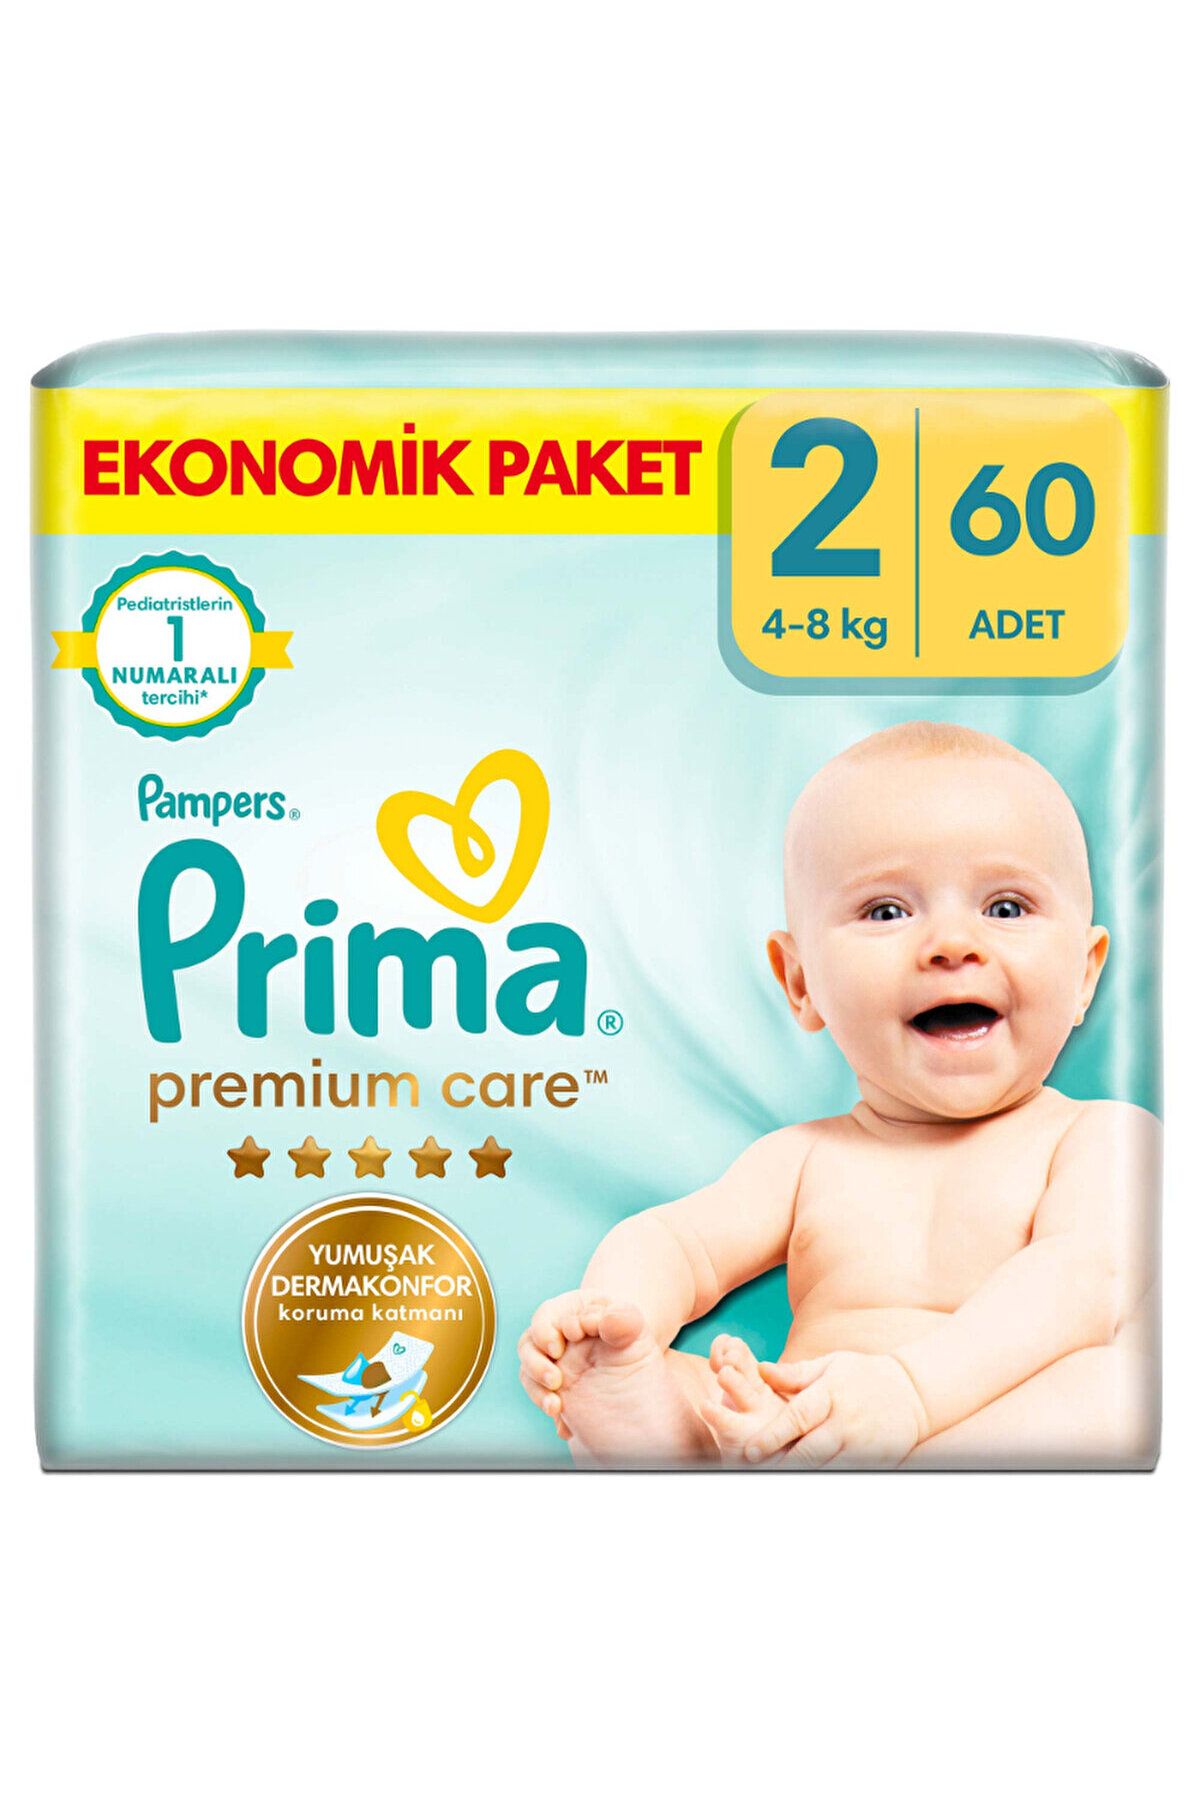 Prima Pampers Bebek Bezi Premium Care 2 Numara 60 Adet Ekonomik Paket